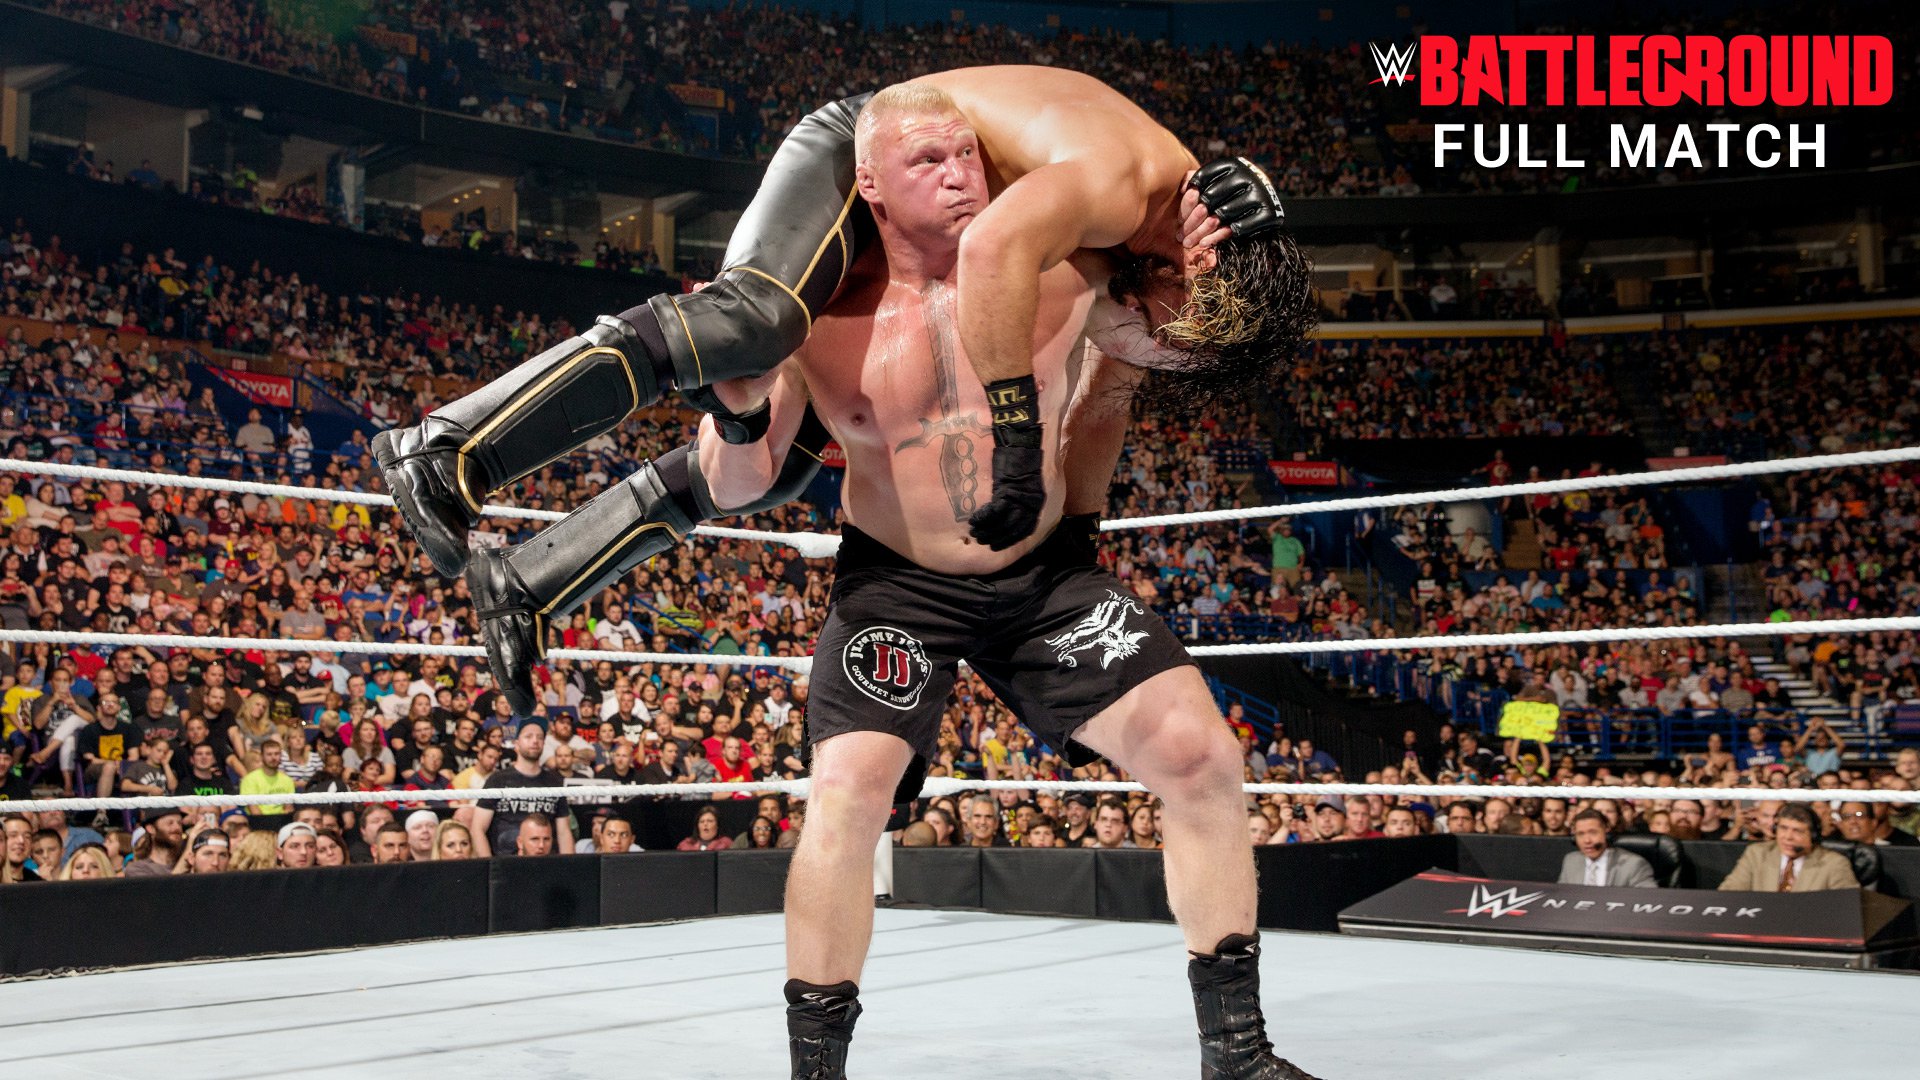 Image result for Battleground 2015 WWE World Heavyweight Championship